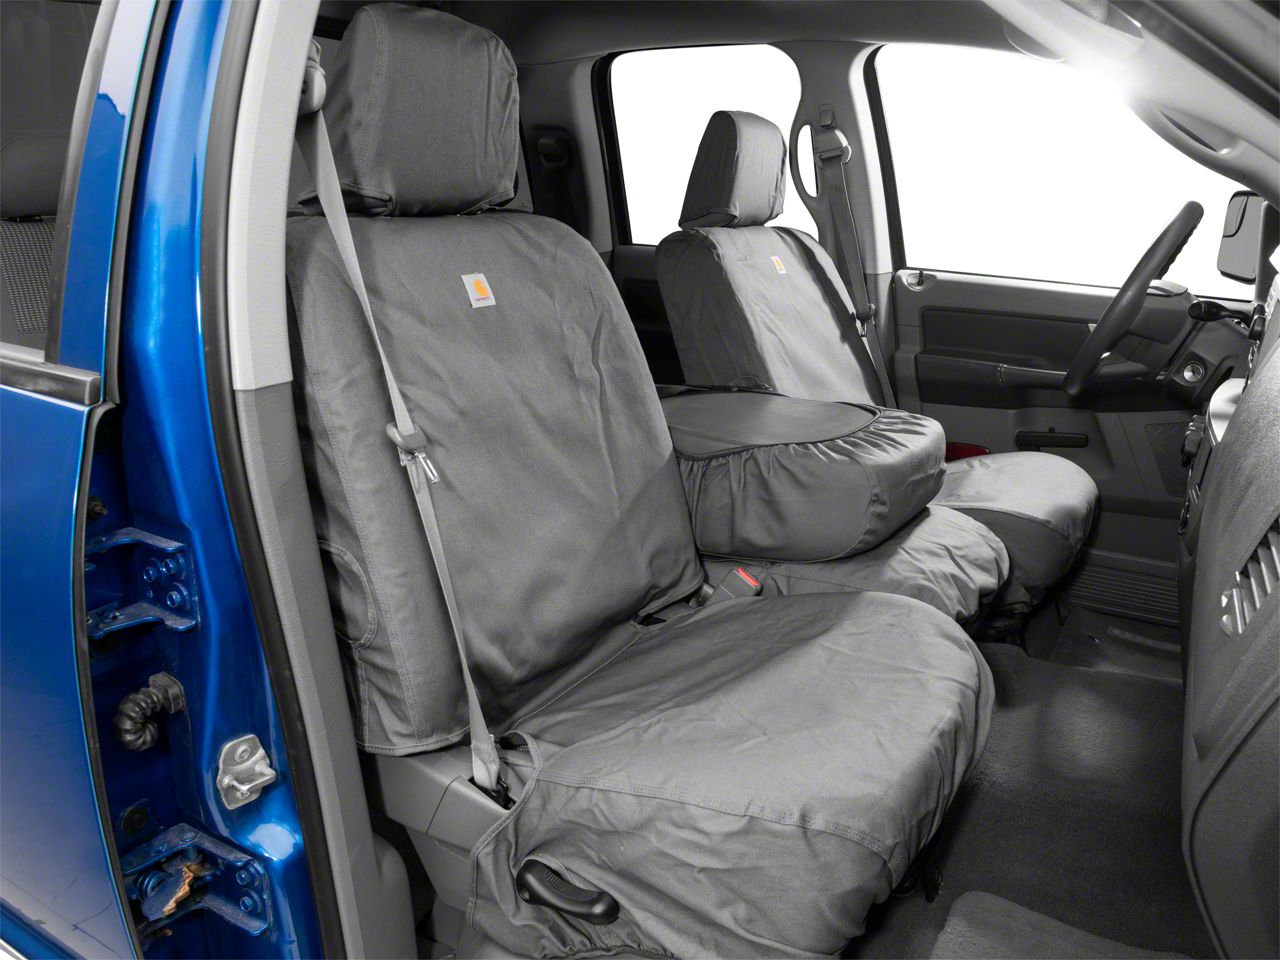 Covercraft Ram Carhartt Seat Saver Front Cover Gravel R102837 02 08 1500 W Bench - Covercraft Carhartt Seat Covers Ram 1500